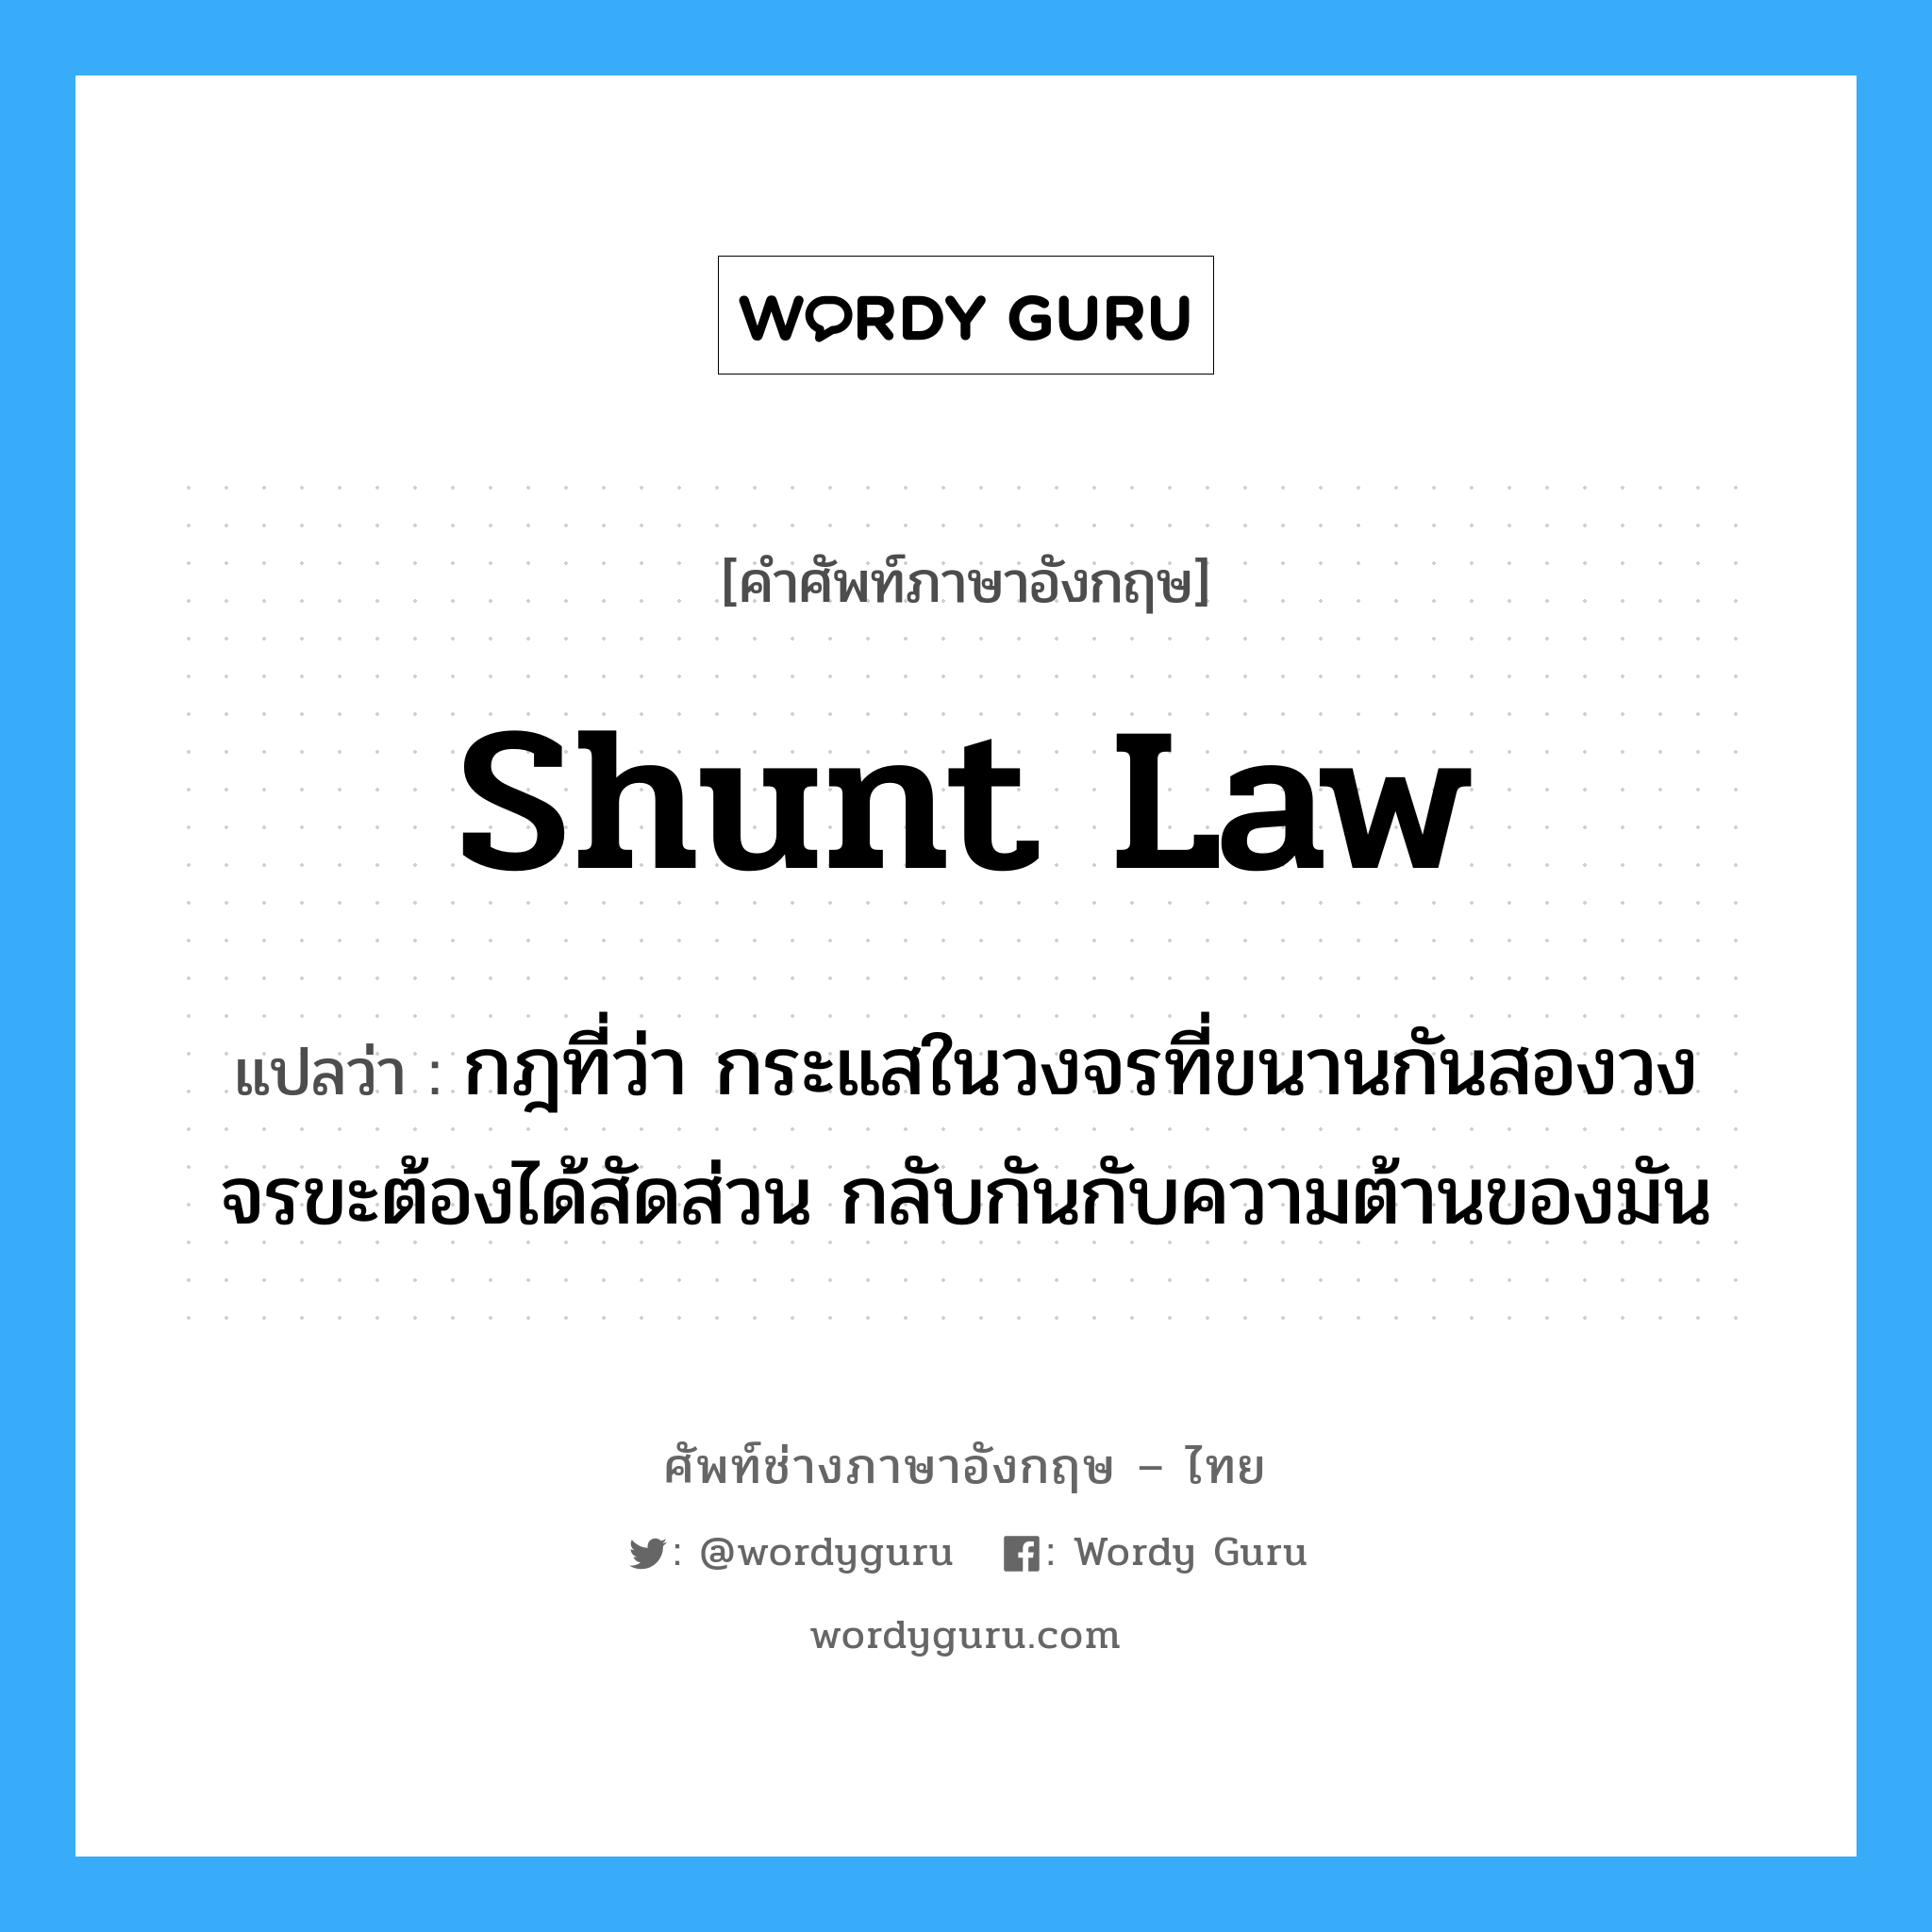 shunt law แปลว่า?, คำศัพท์ช่างภาษาอังกฤษ - ไทย shunt law คำศัพท์ภาษาอังกฤษ shunt law แปลว่า กฎที่ว่า กระแสในวงจรที่ขนานกันสองวงจรขะต้องได้สัดส่วน กลับกันกับความต้านของมัน